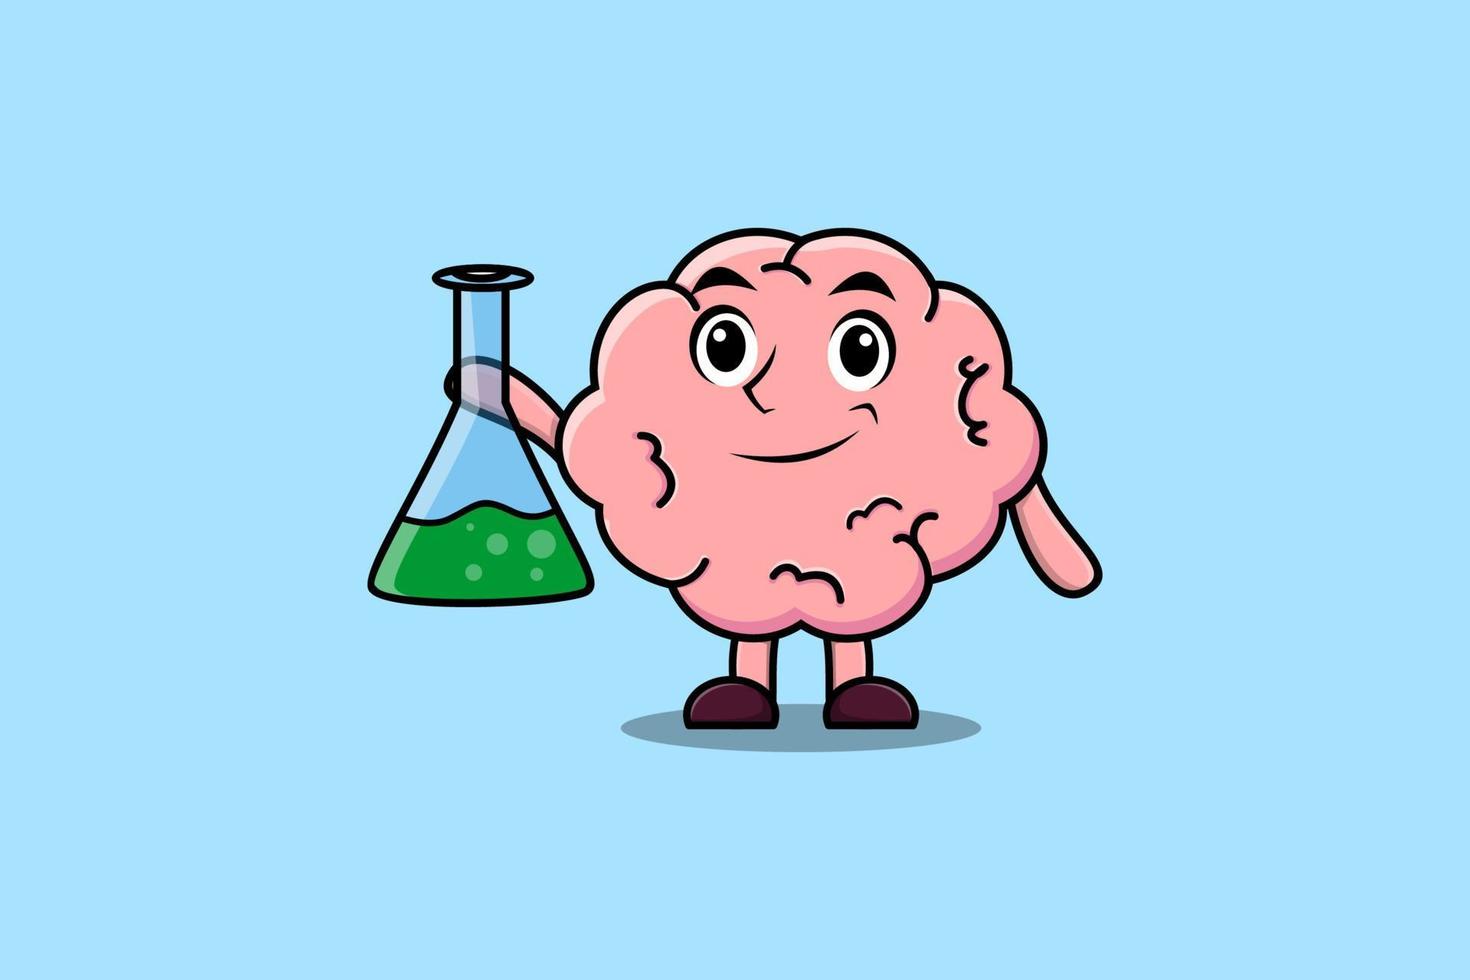 cerebro de personaje de mascota de dibujos animados lindo como científico vector